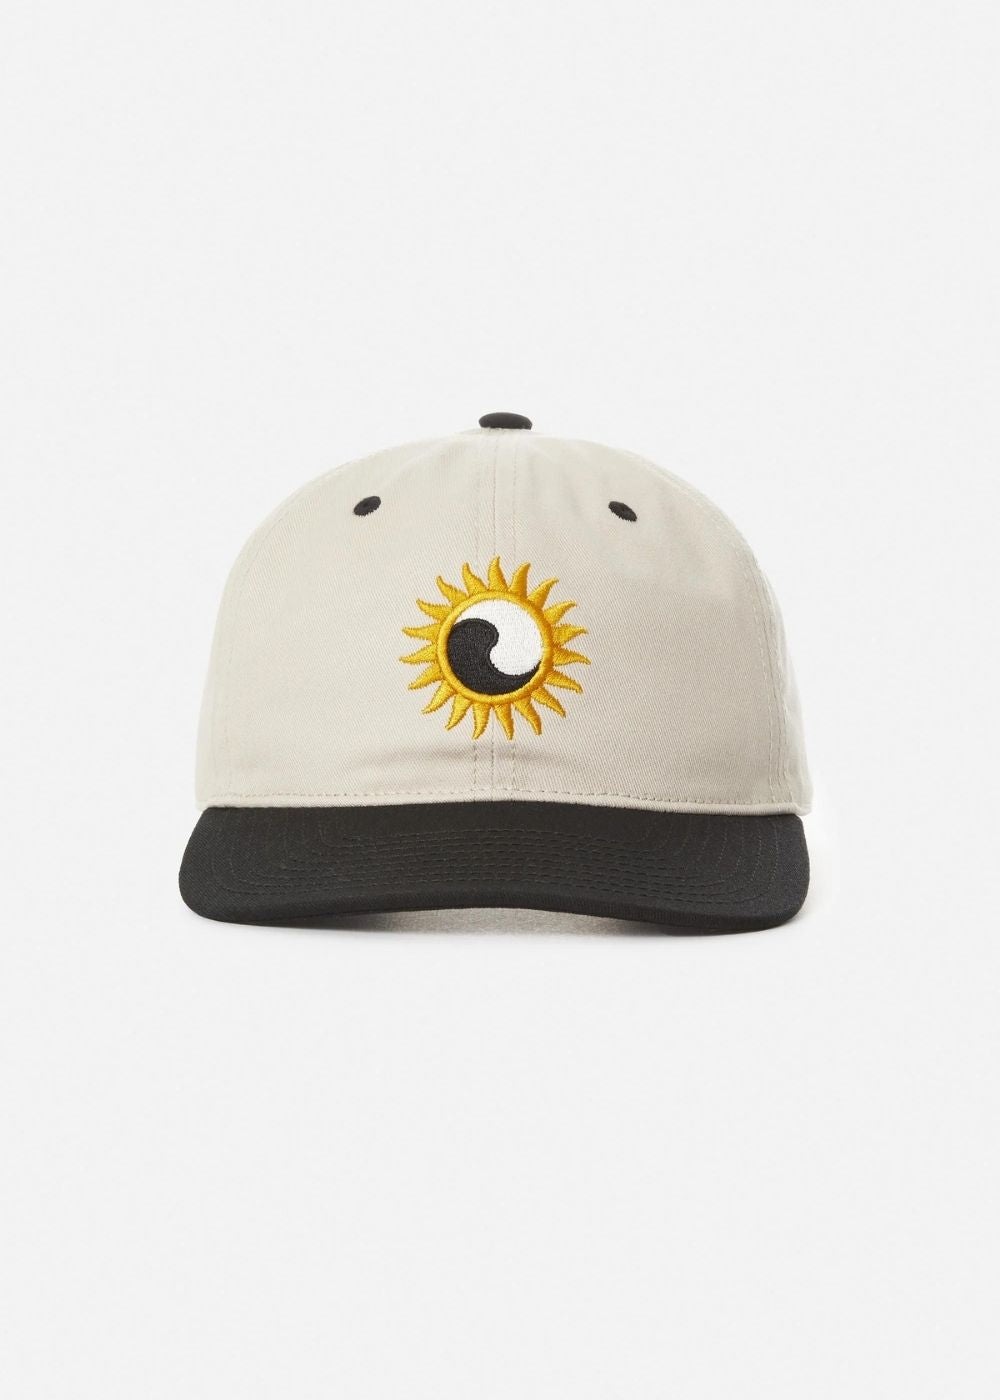 Sunfire Hat - כובע יין יאנג שמש מדגם